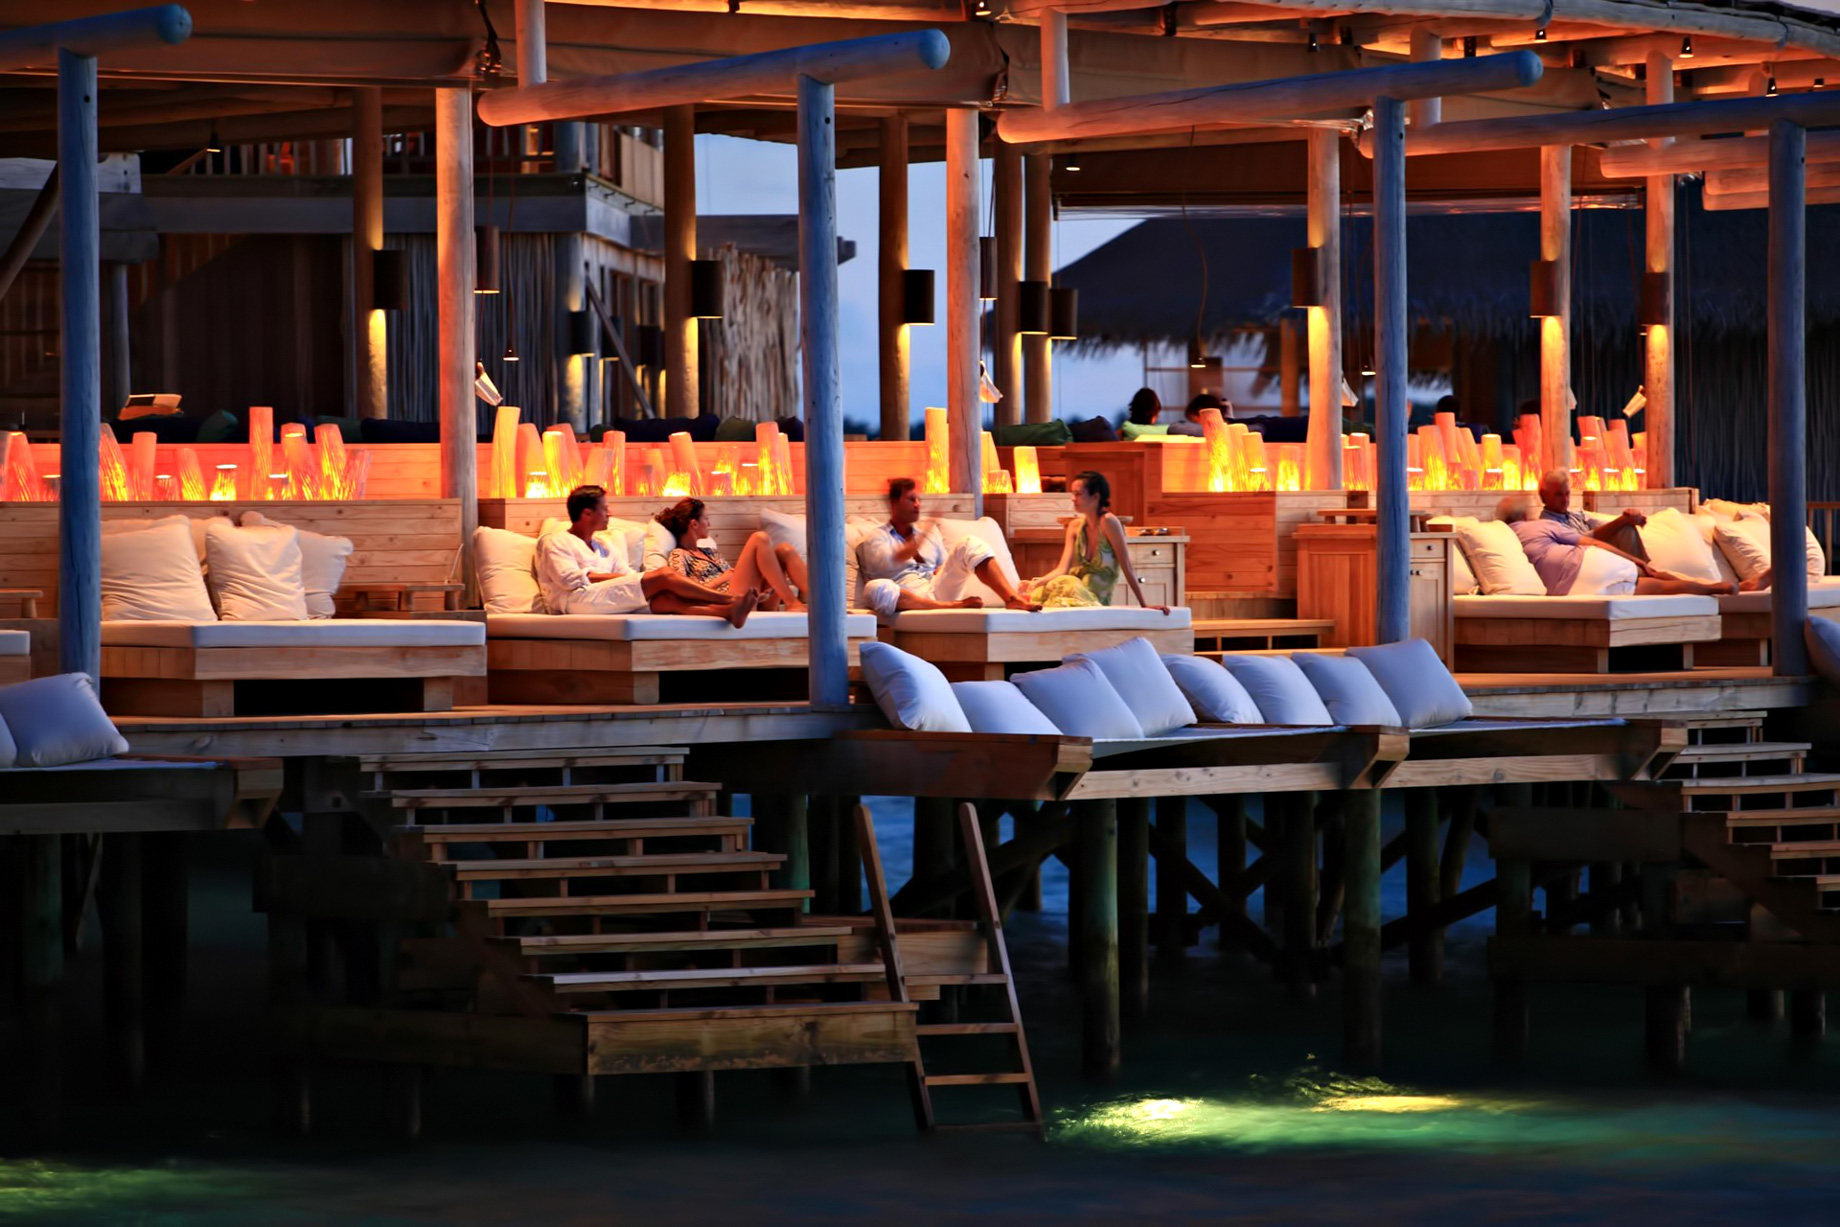 Six Senses Laamu Resort - Laamu Atoll, Maldives - Overwater Chill Bar Evening Vibe